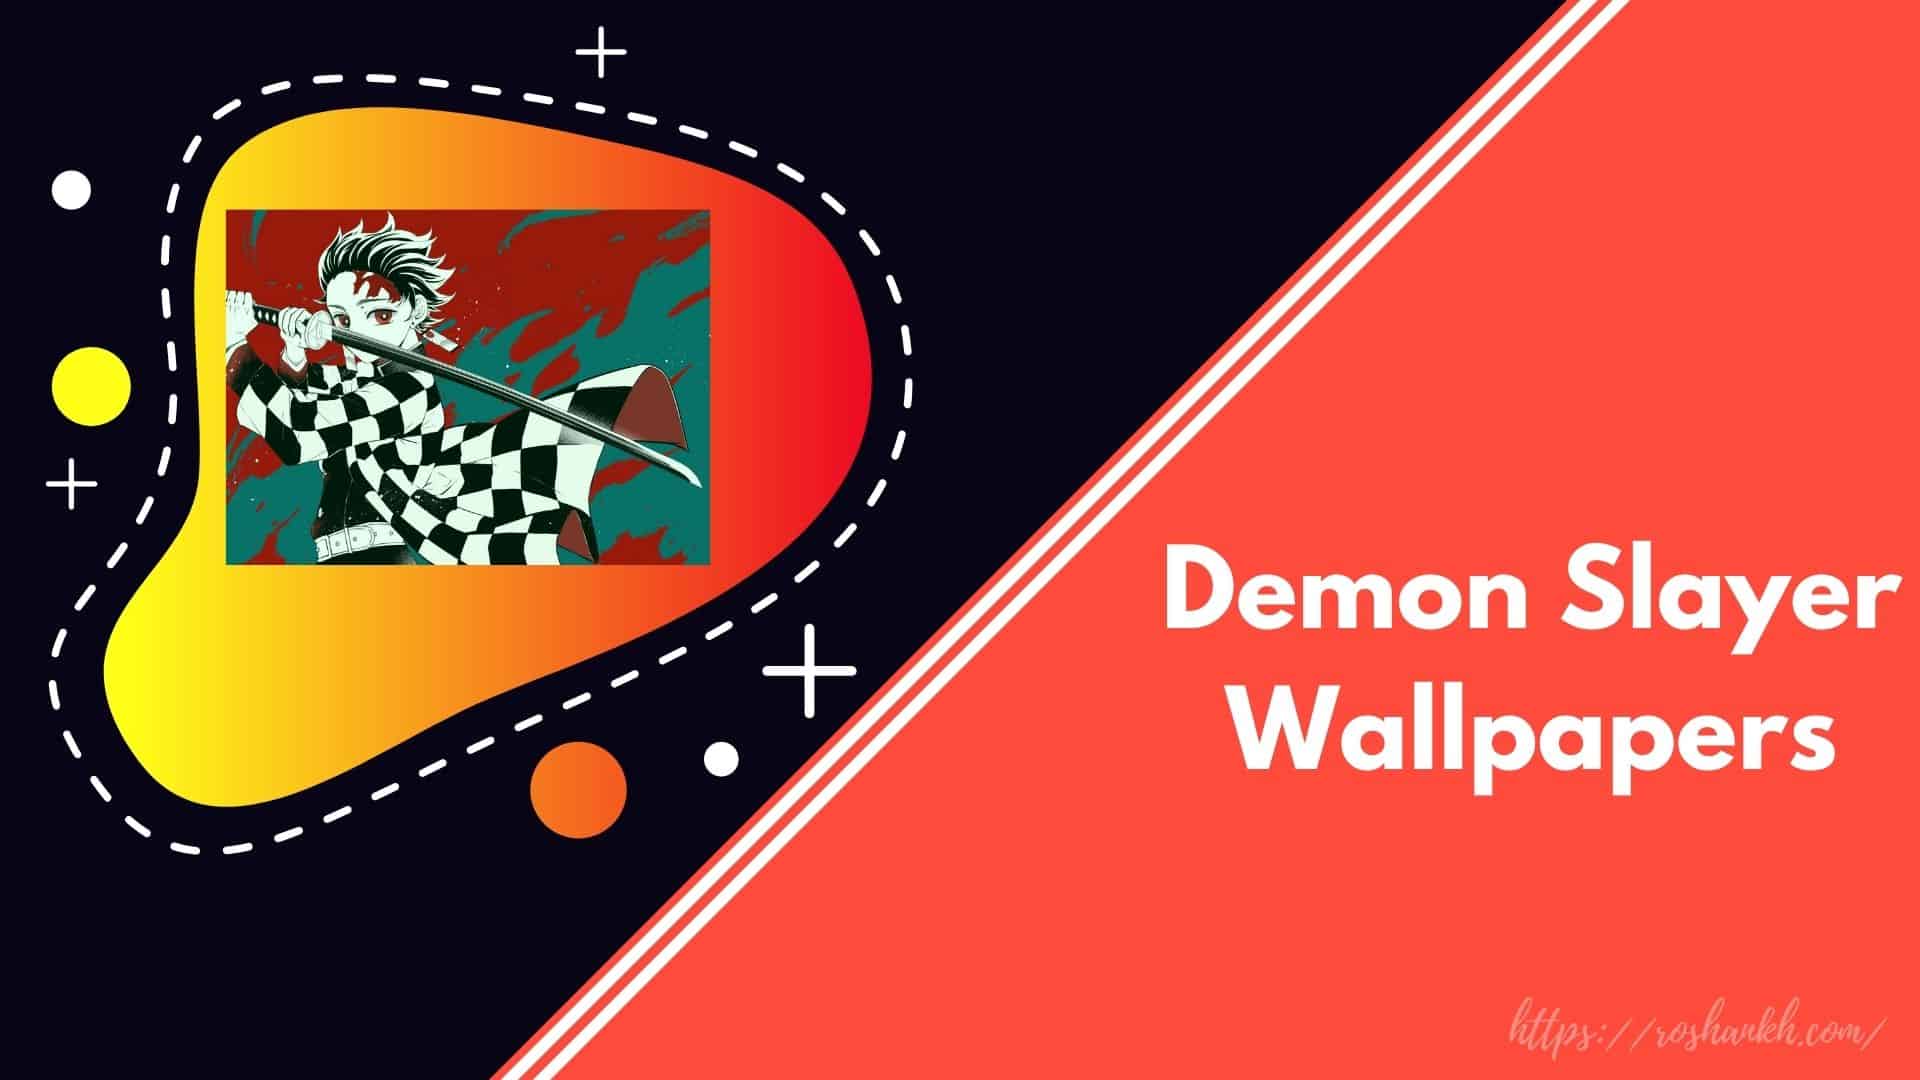 Demon slayer wallpapers free download